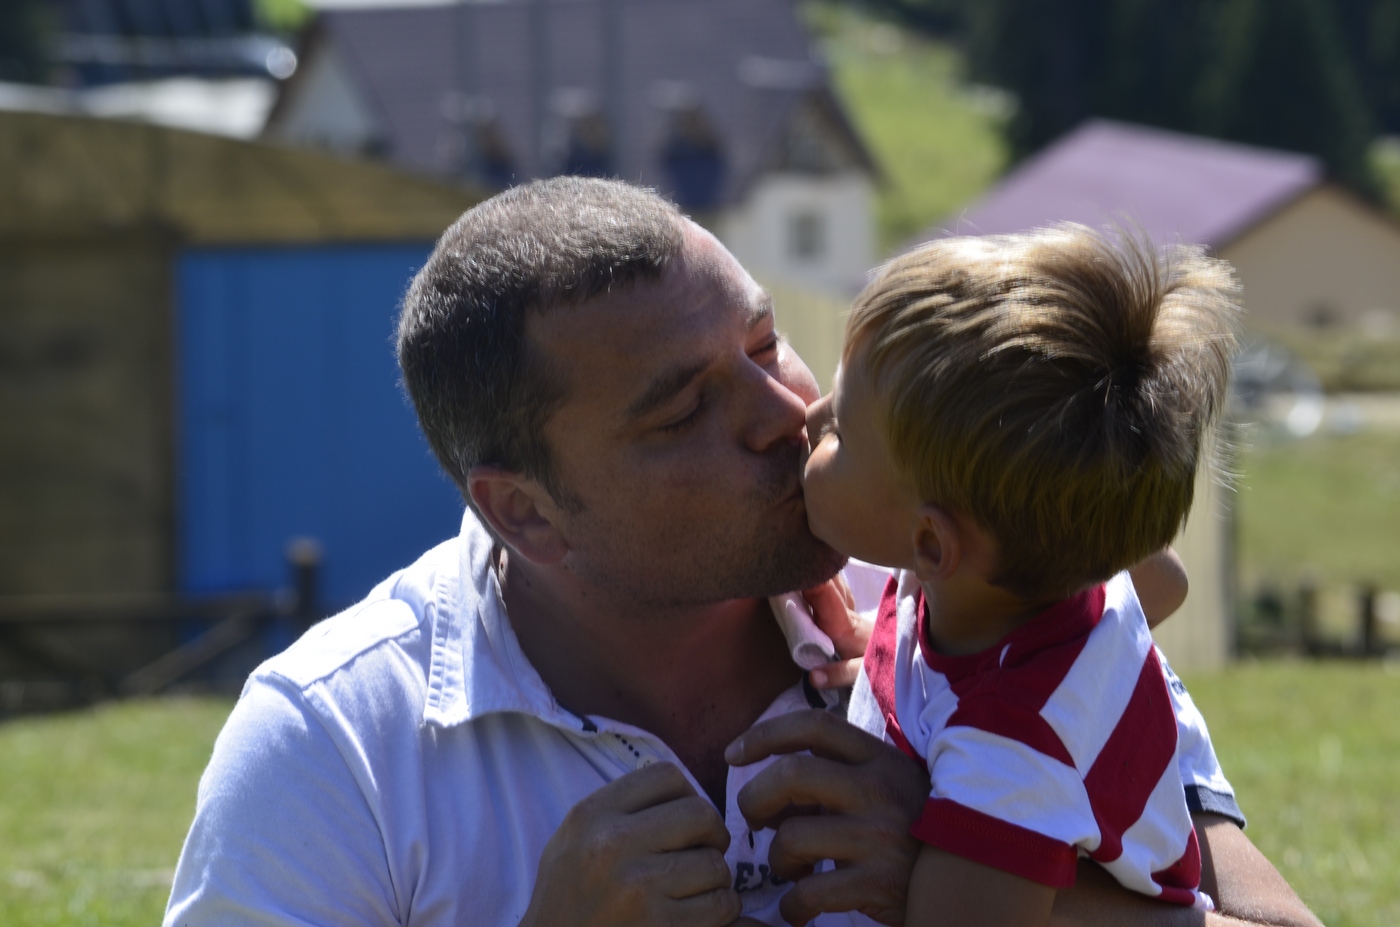 Father cocks. Отец целует сына. Мальчик целует папу. Ребенок целует папу в губы. Отец целует сына в губы.